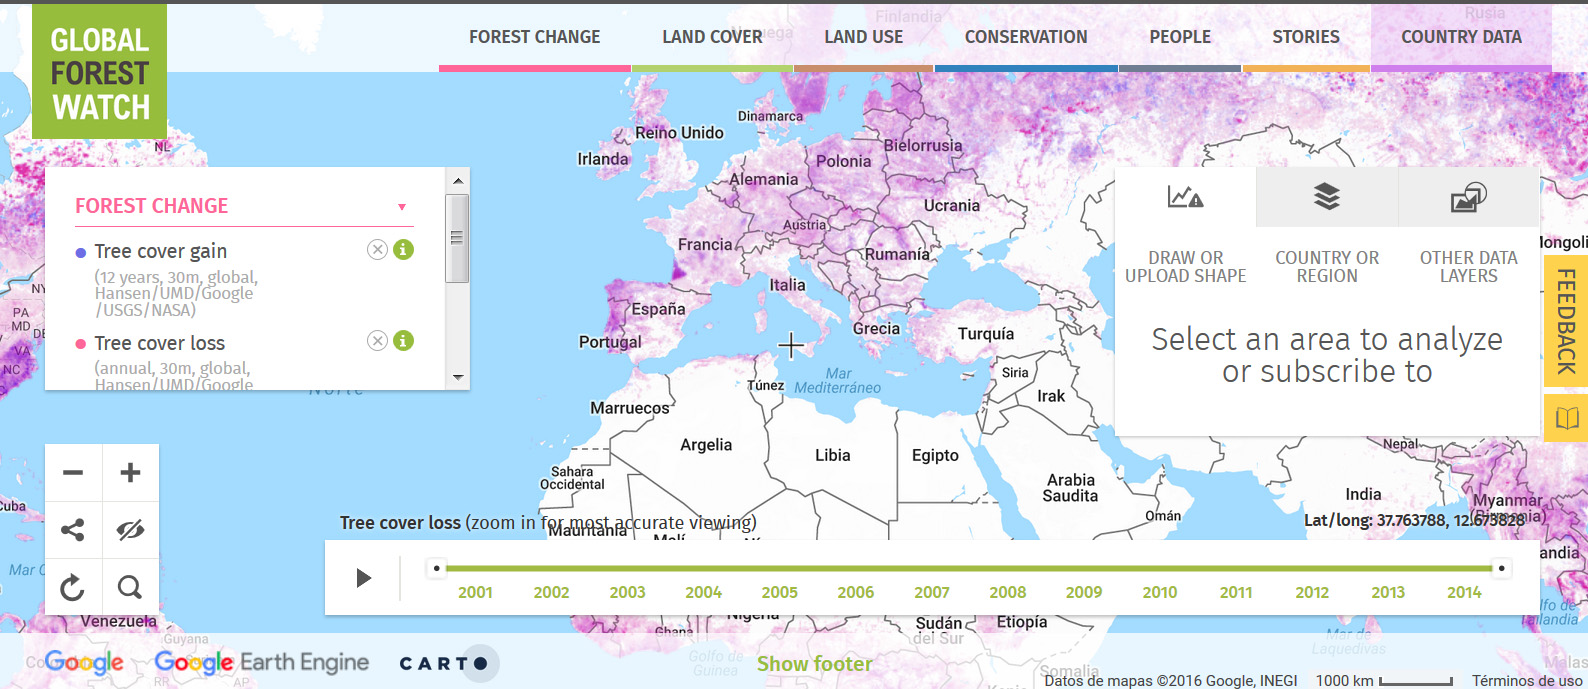 Big Data globalforest